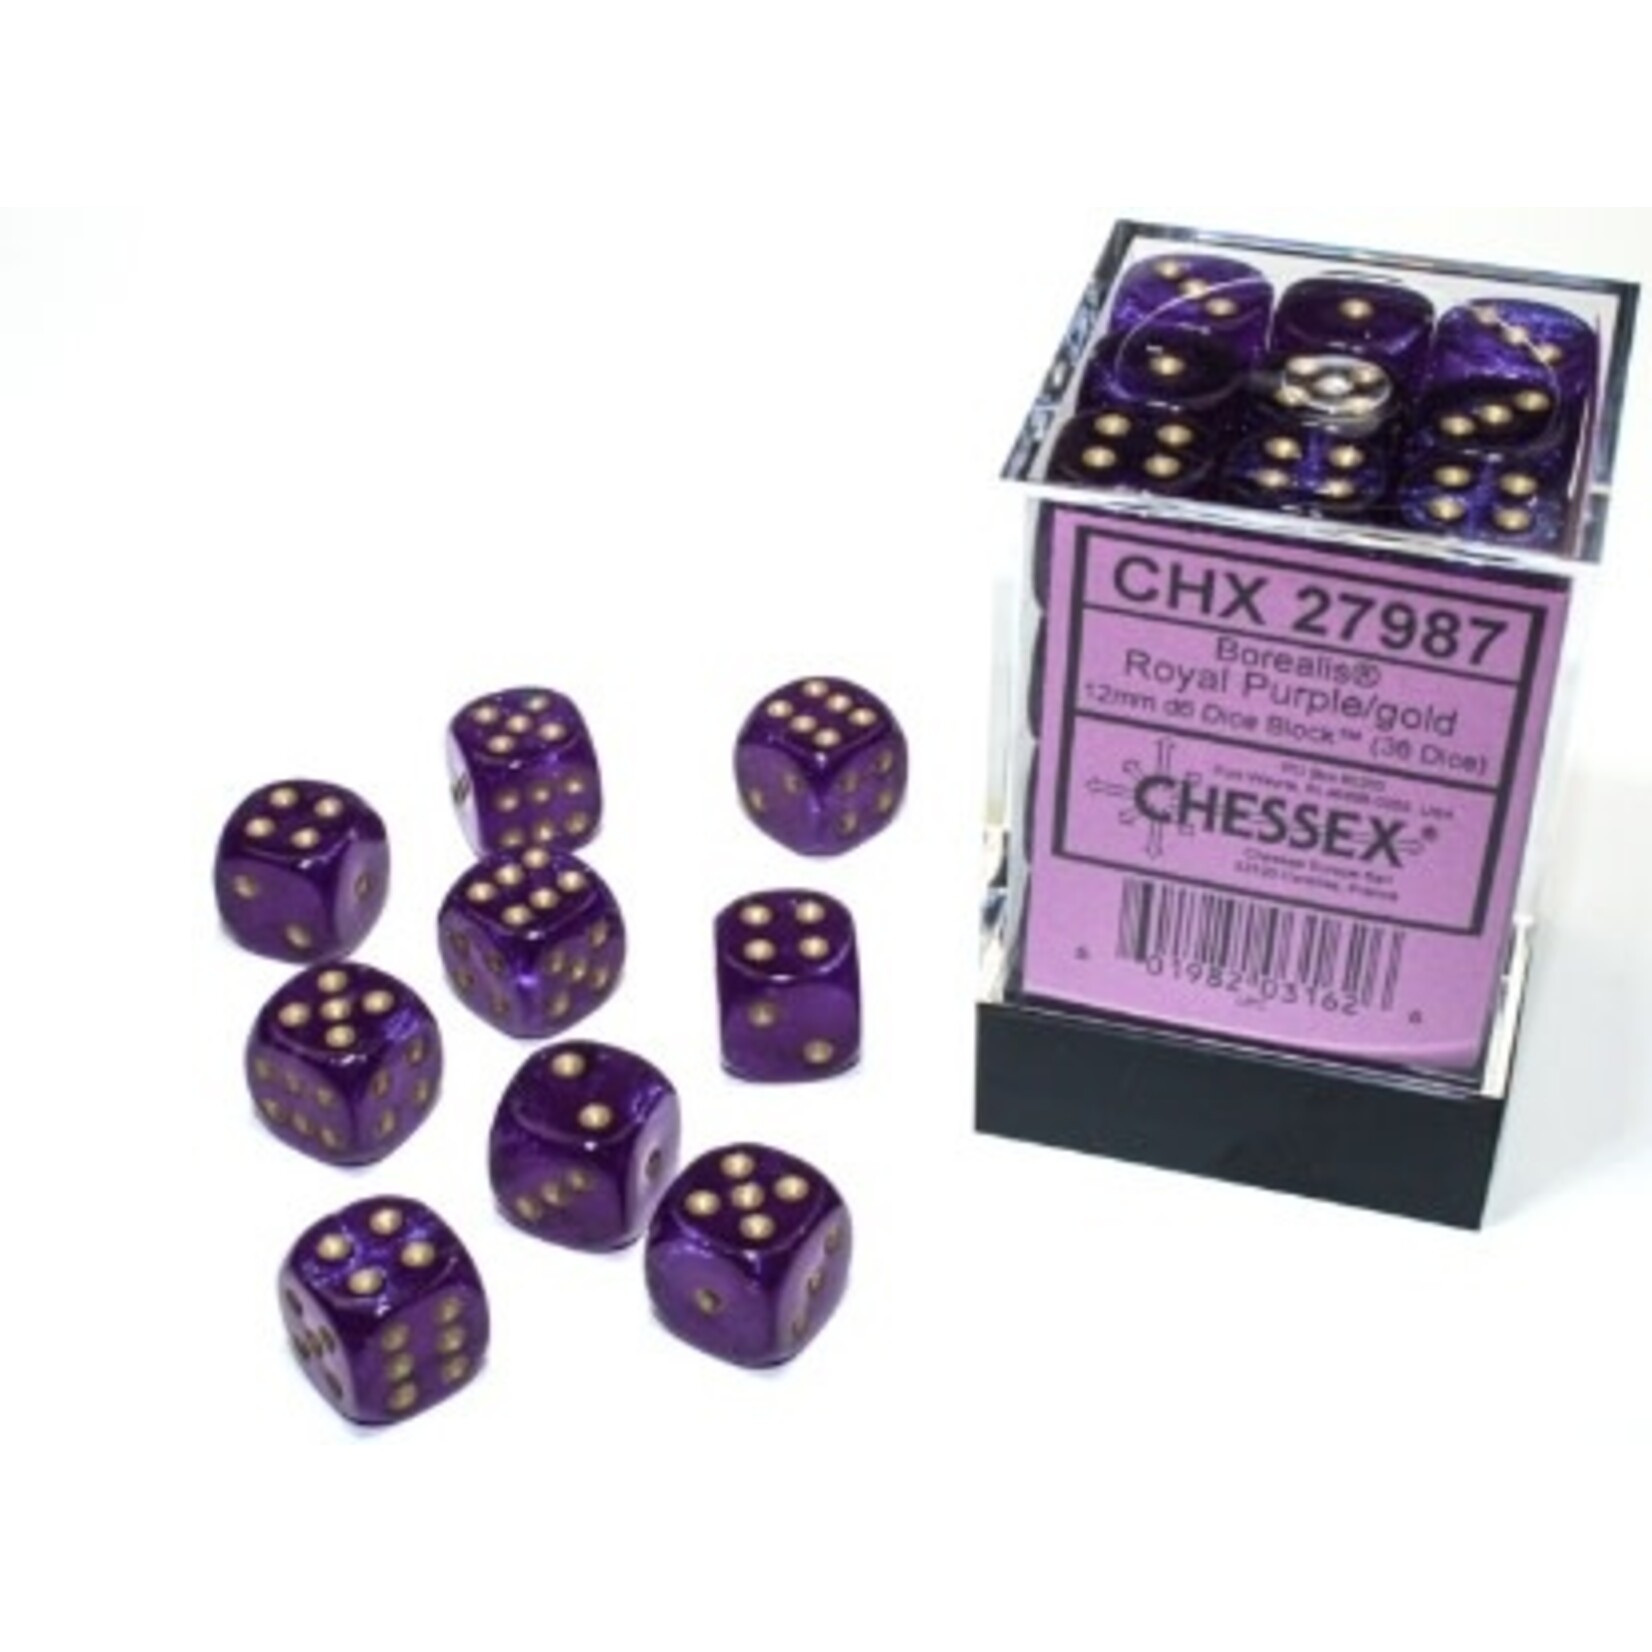 Chessex Borealis Royal Purple/gold Luminary 12mm d6 Dice Block (36 dice)